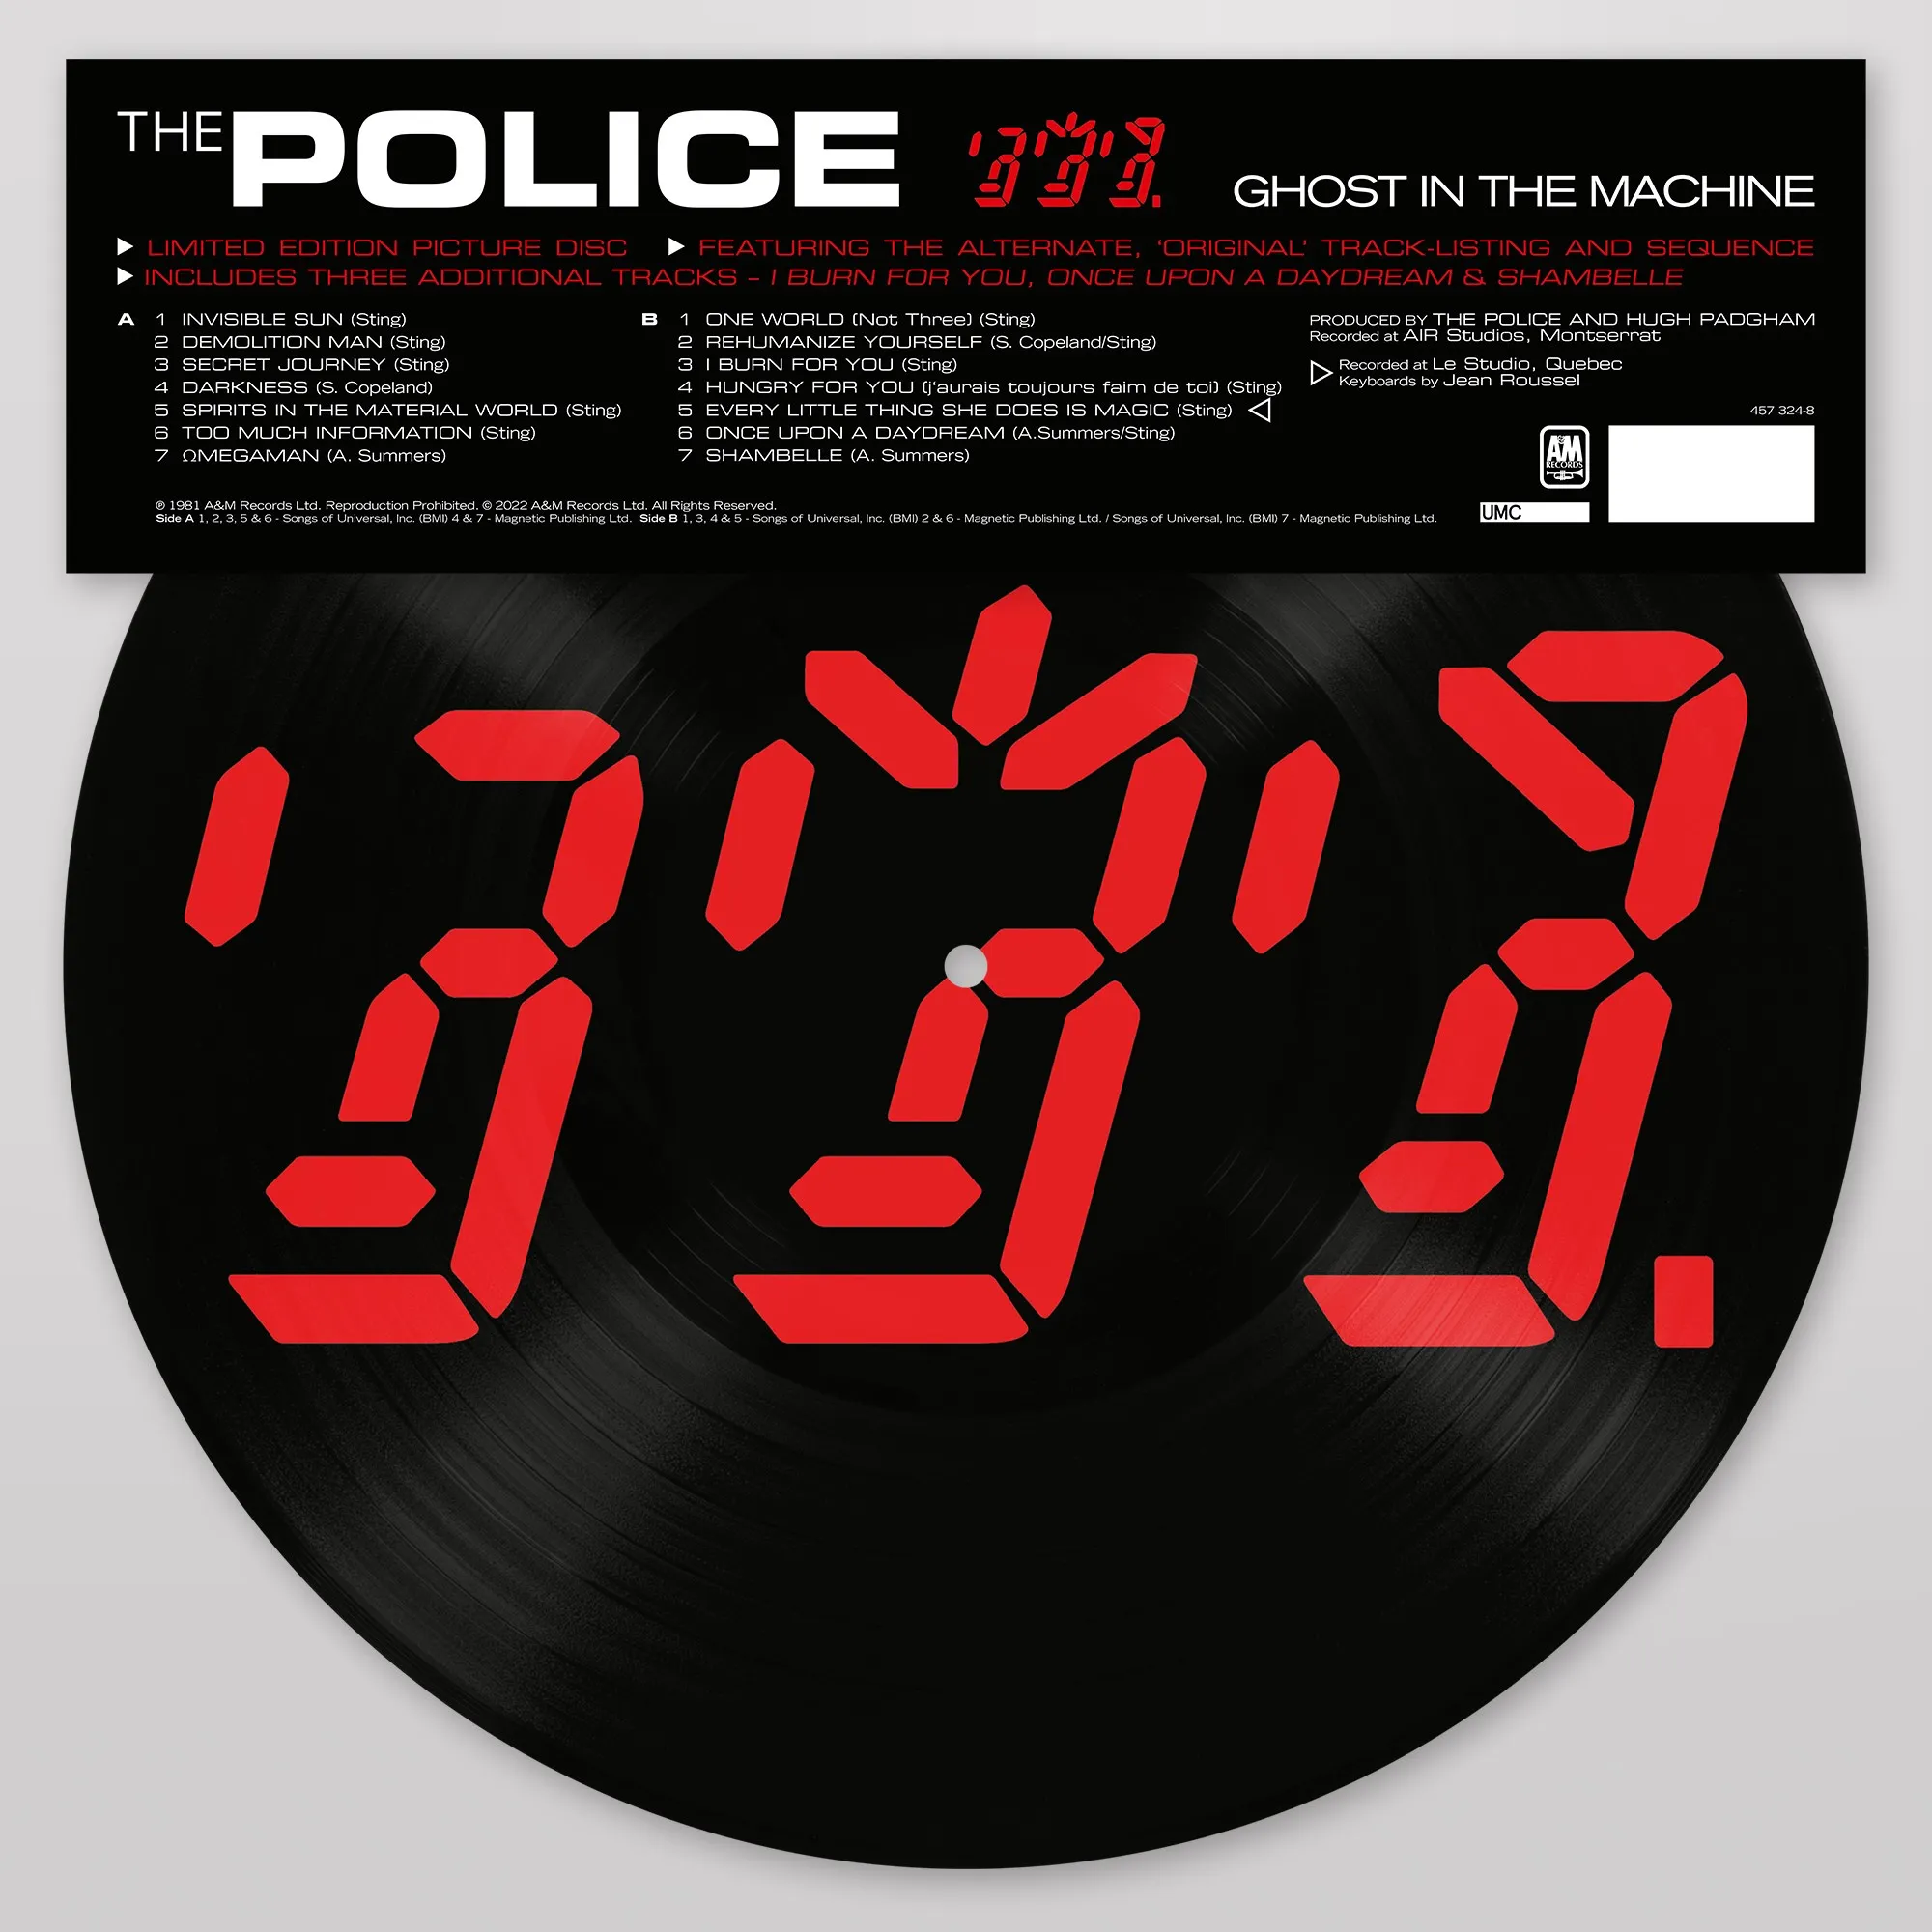 The Police |  Vinyl LP | Ghost in the Machine | UMC